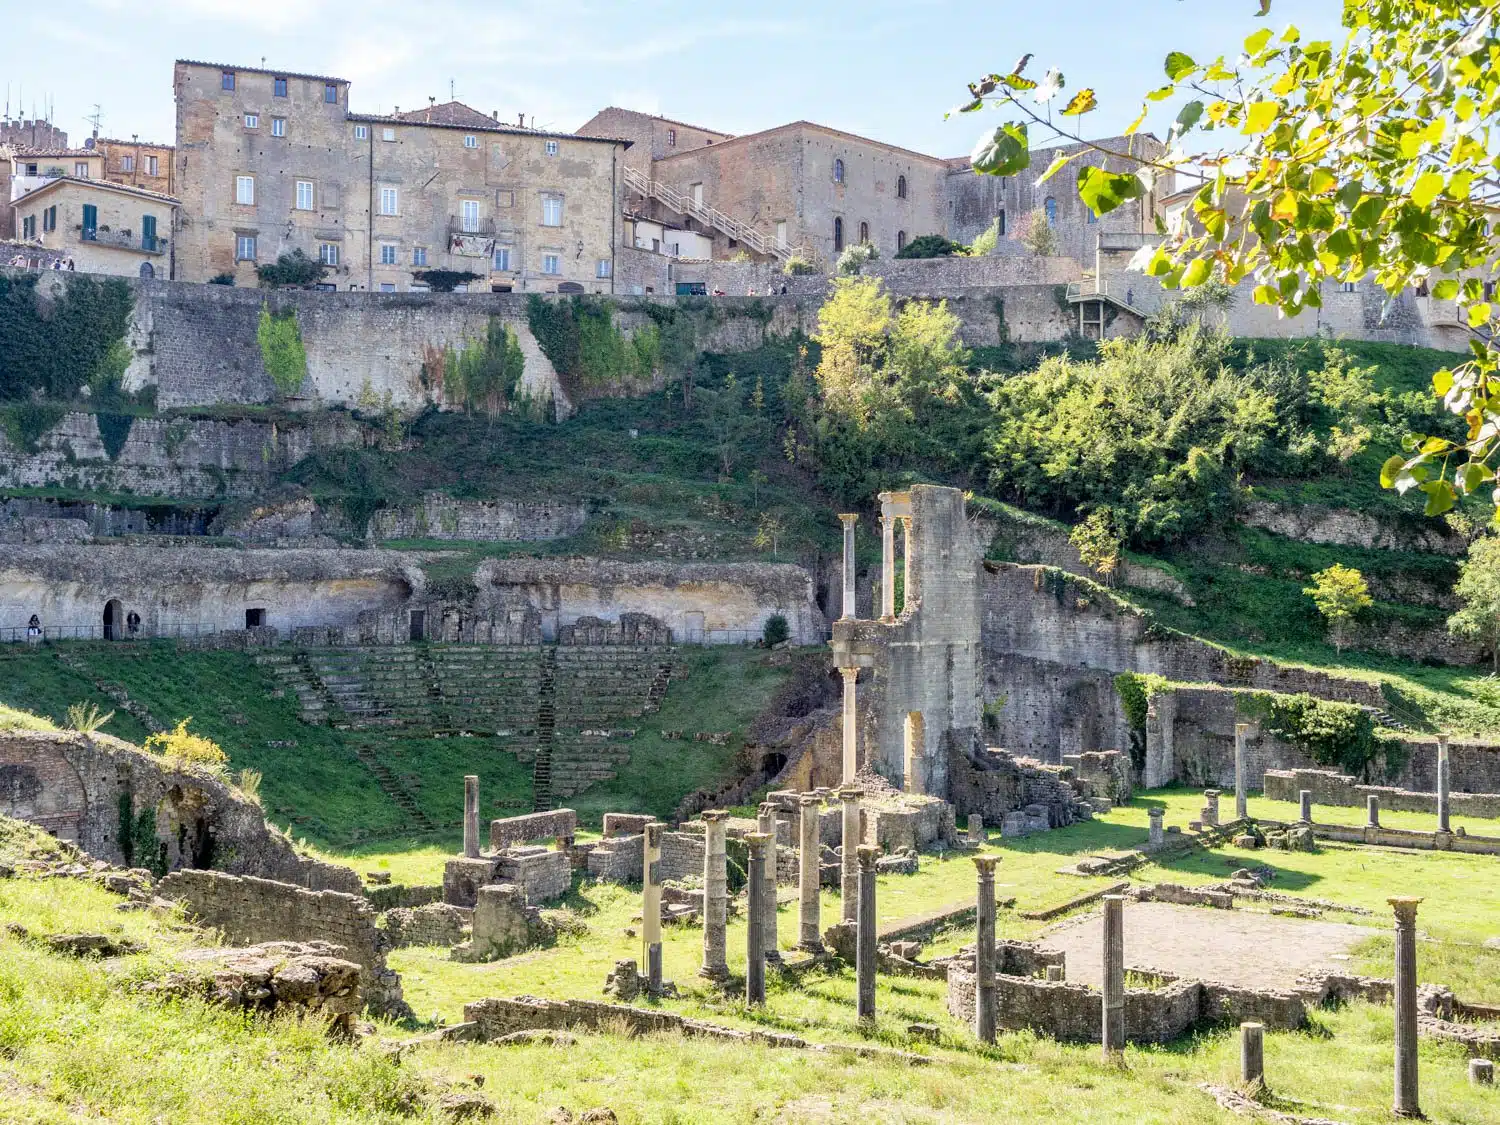 Mooiste plekken in Toscane - Volterra